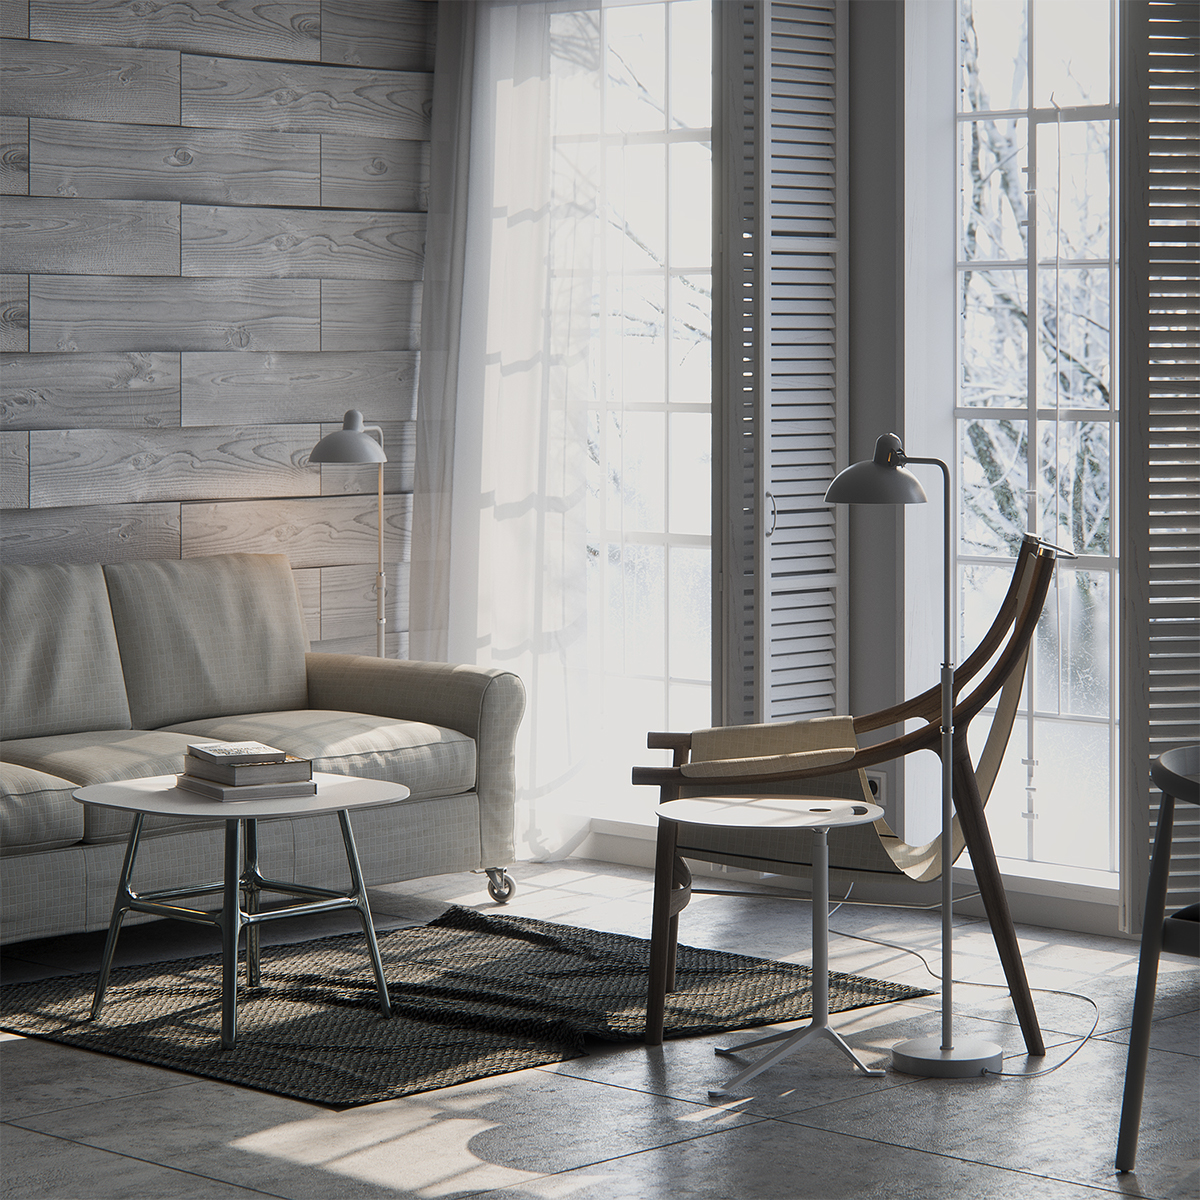 Interior living room kitchen apartment light 3D visualization CGI Render selection Double-aye furniture design modern vray